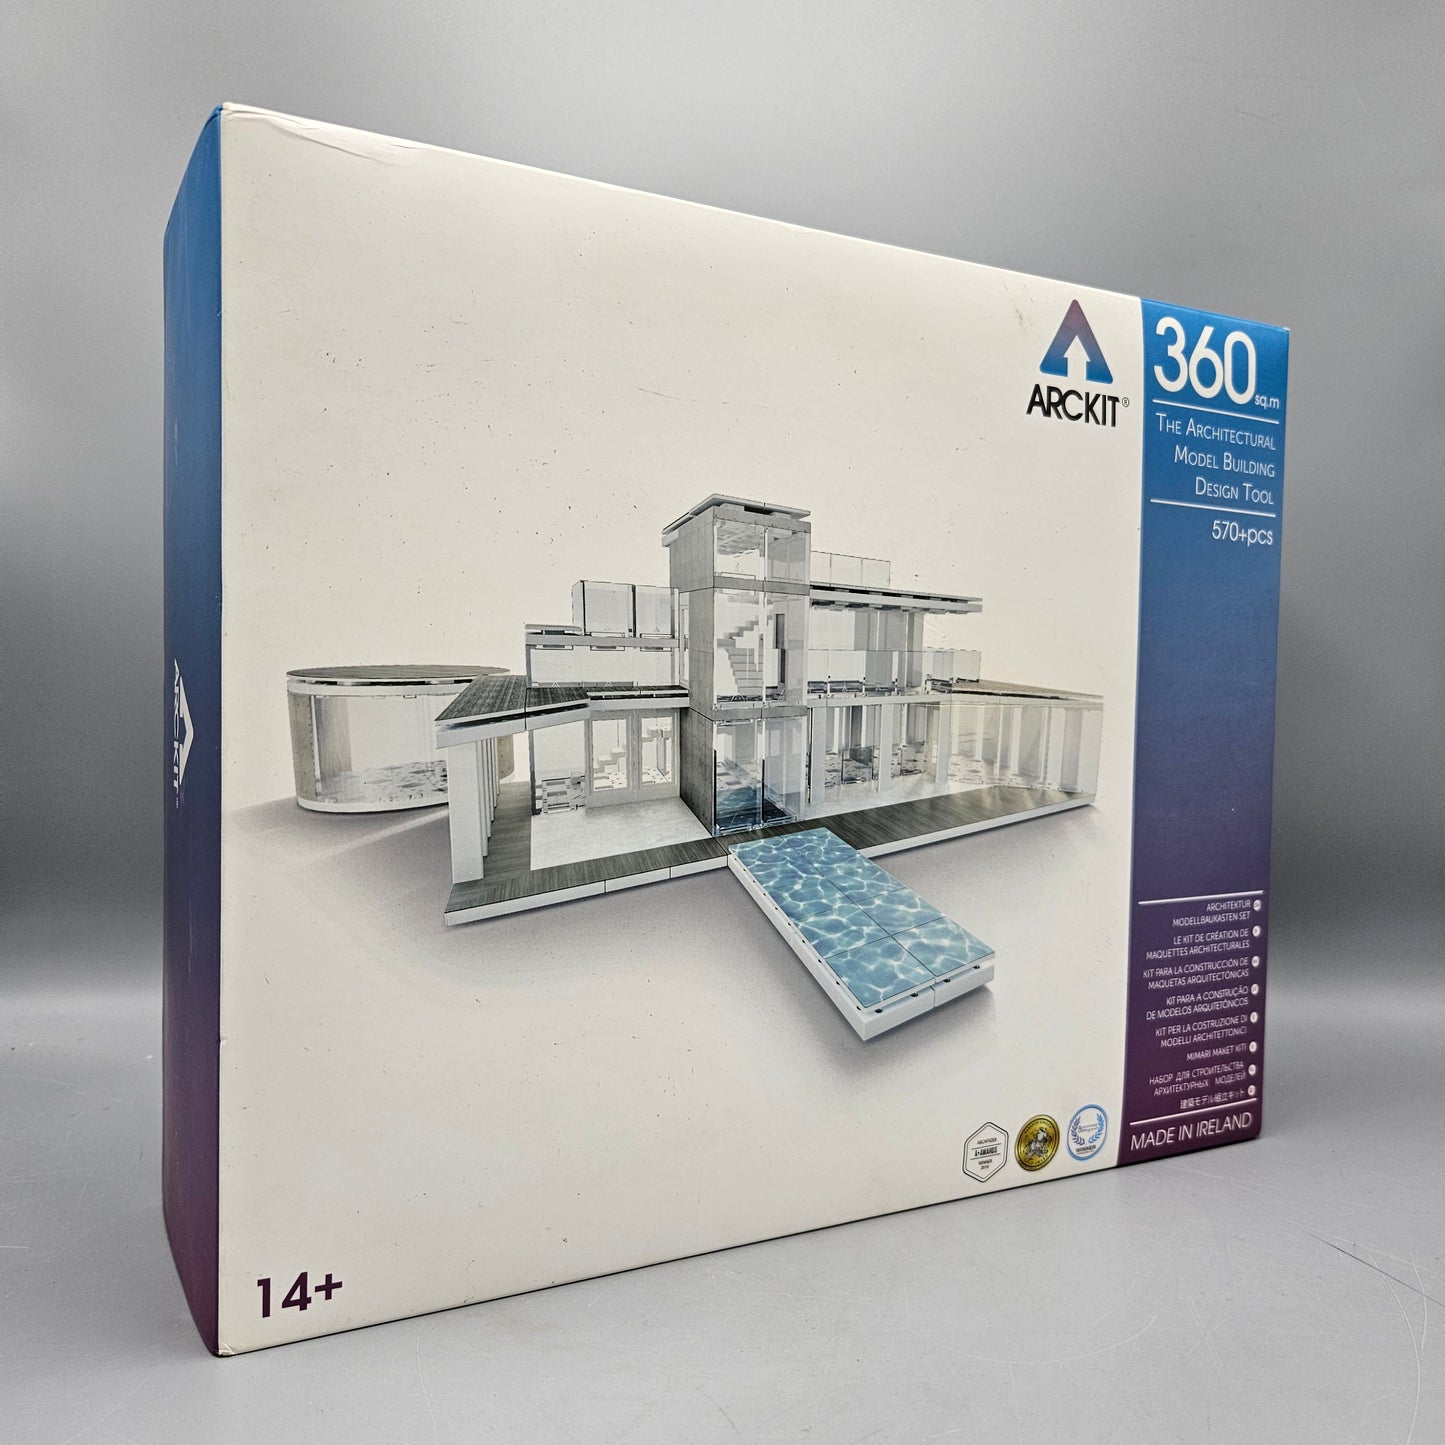 Brand New Arckit 360 Architect Model Building Kit Item A10036